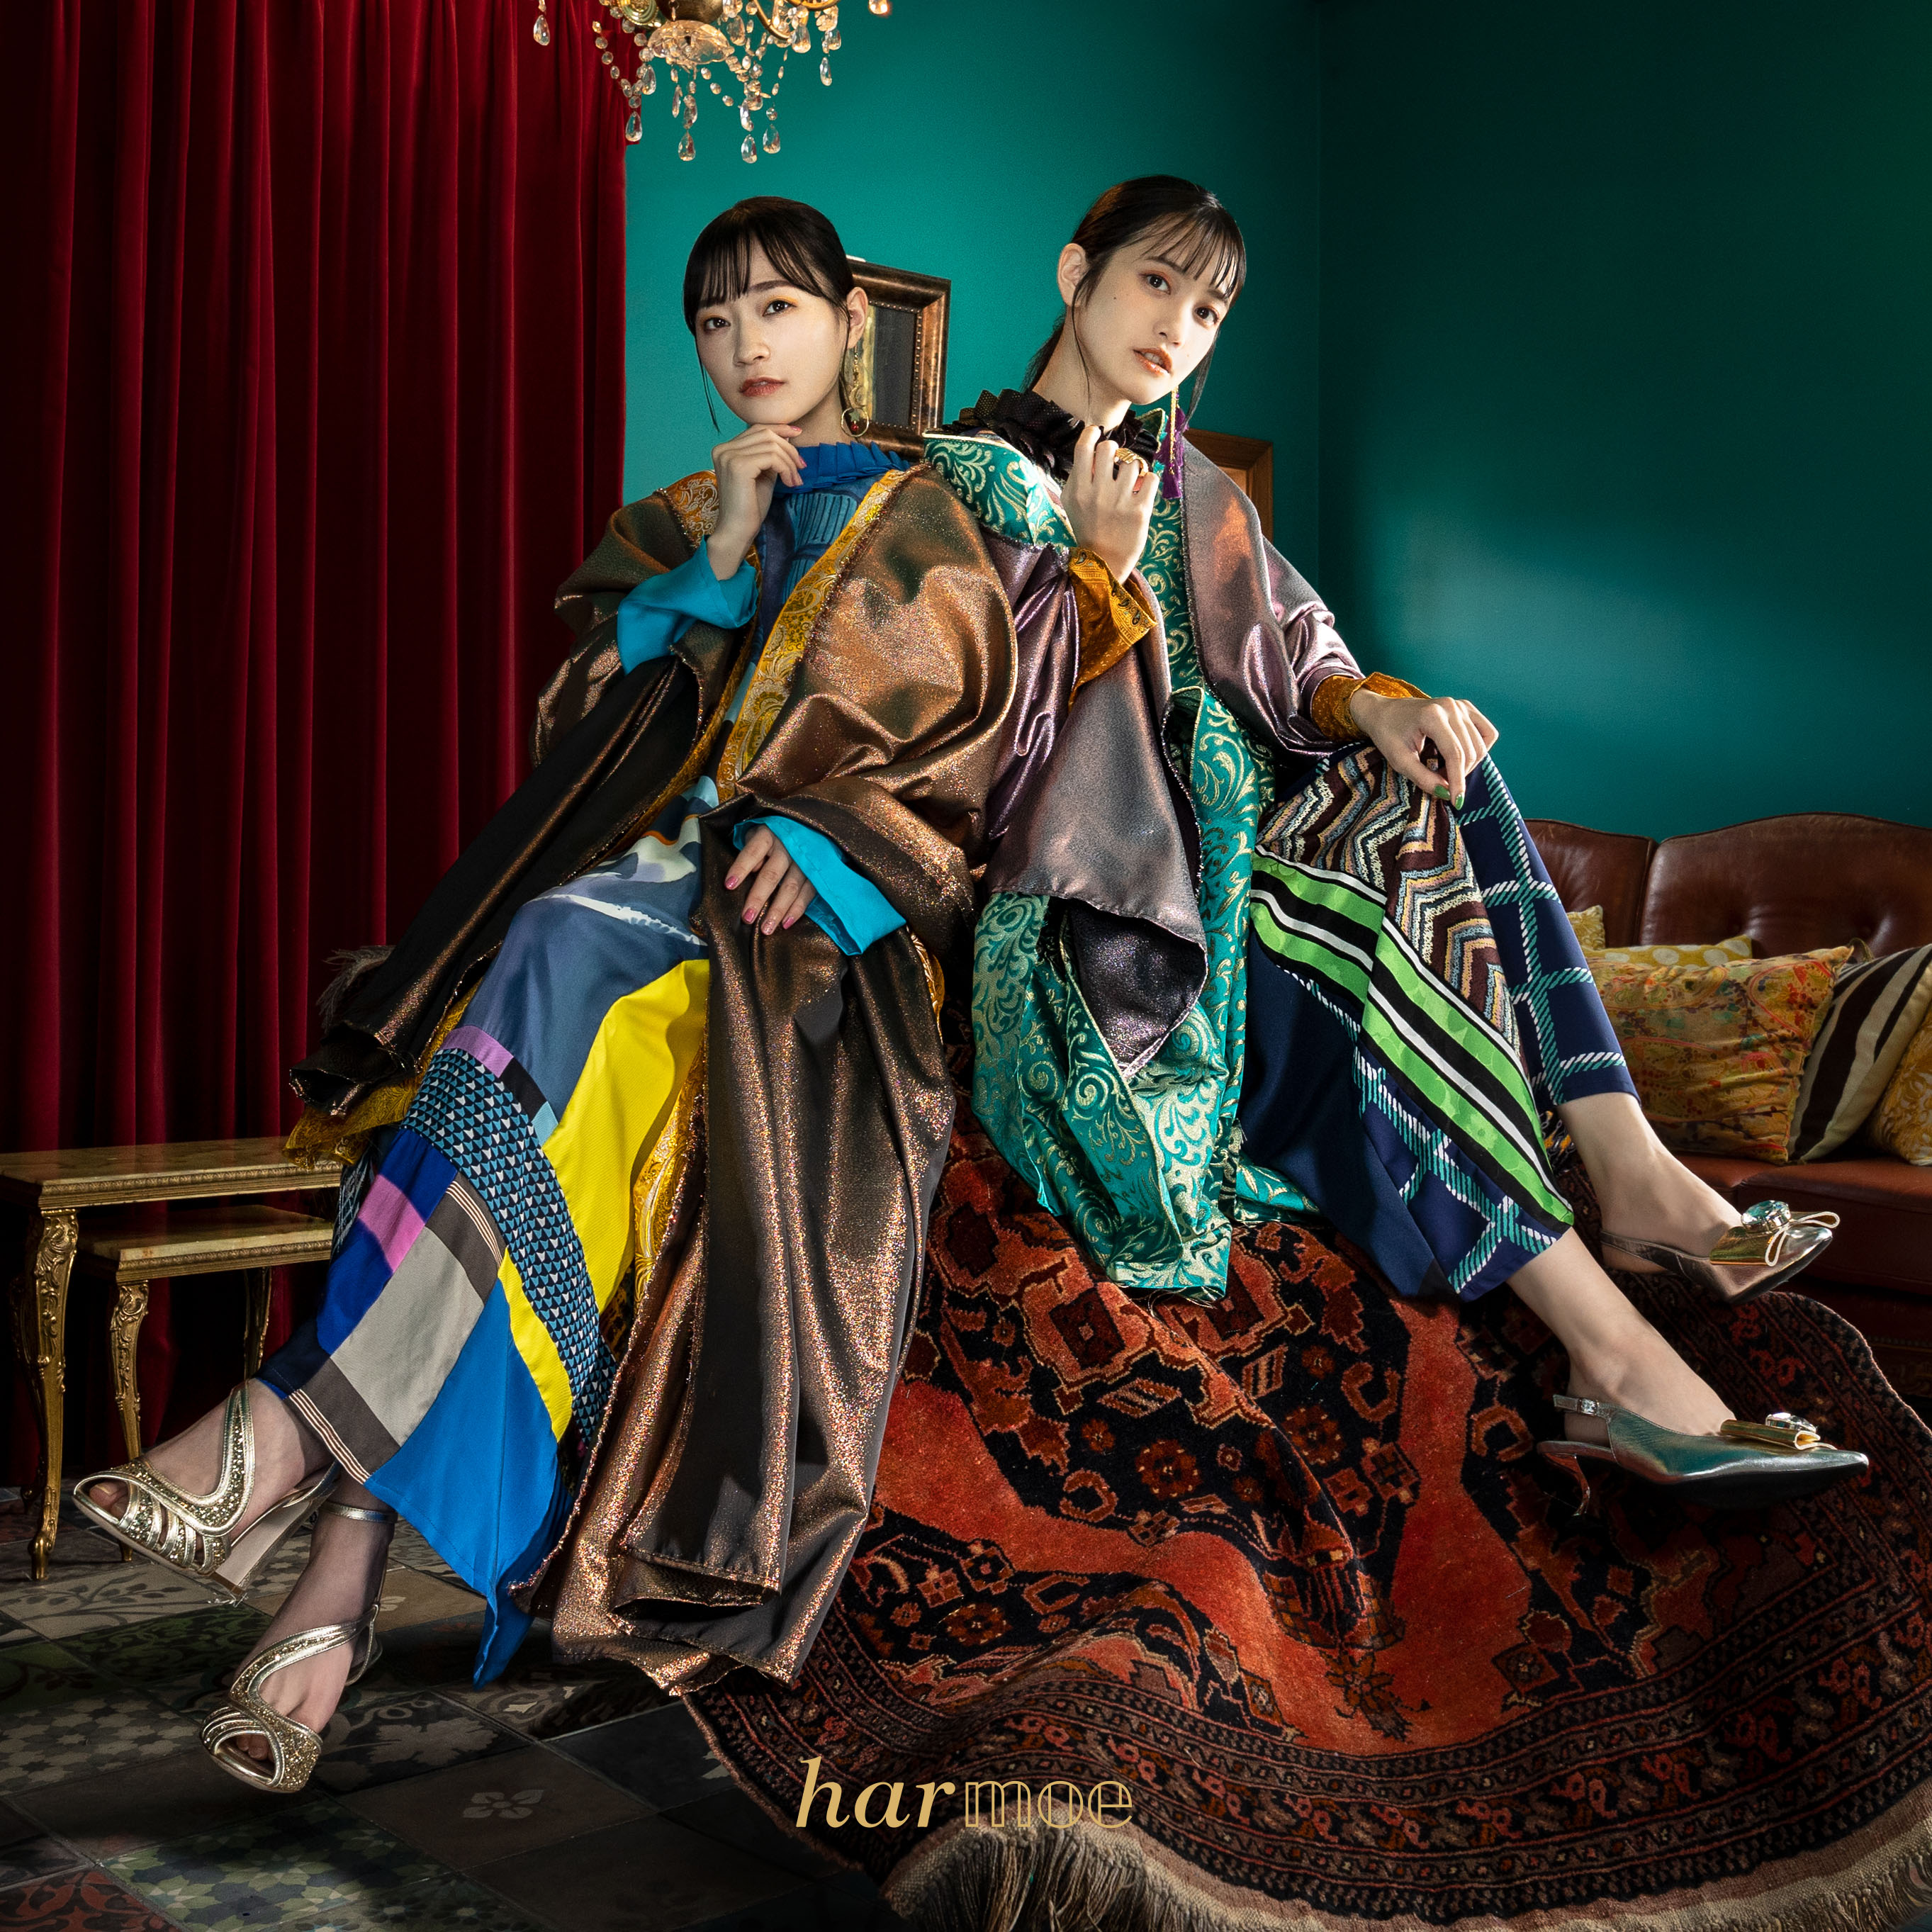 harmoe 3rd single "Arabian Utopian" Normal Edition(CD only) Release on Dec 22nd 2021 No.1